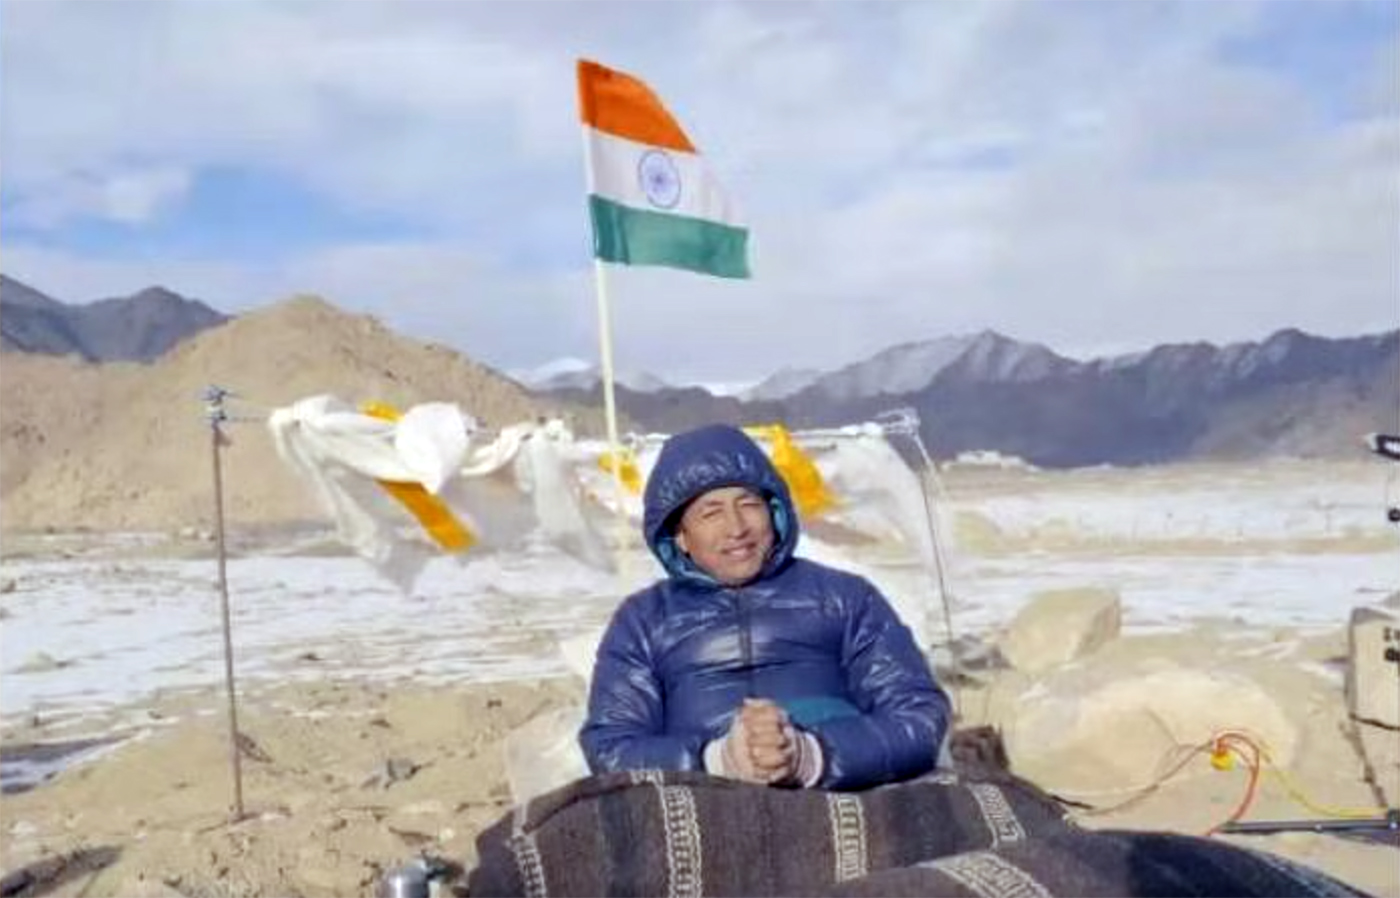 Social reformist Sonam Wangchuk during his five-day climate fast to “save Ladakh”. Photo via Twitter/Sonam Wangchuk